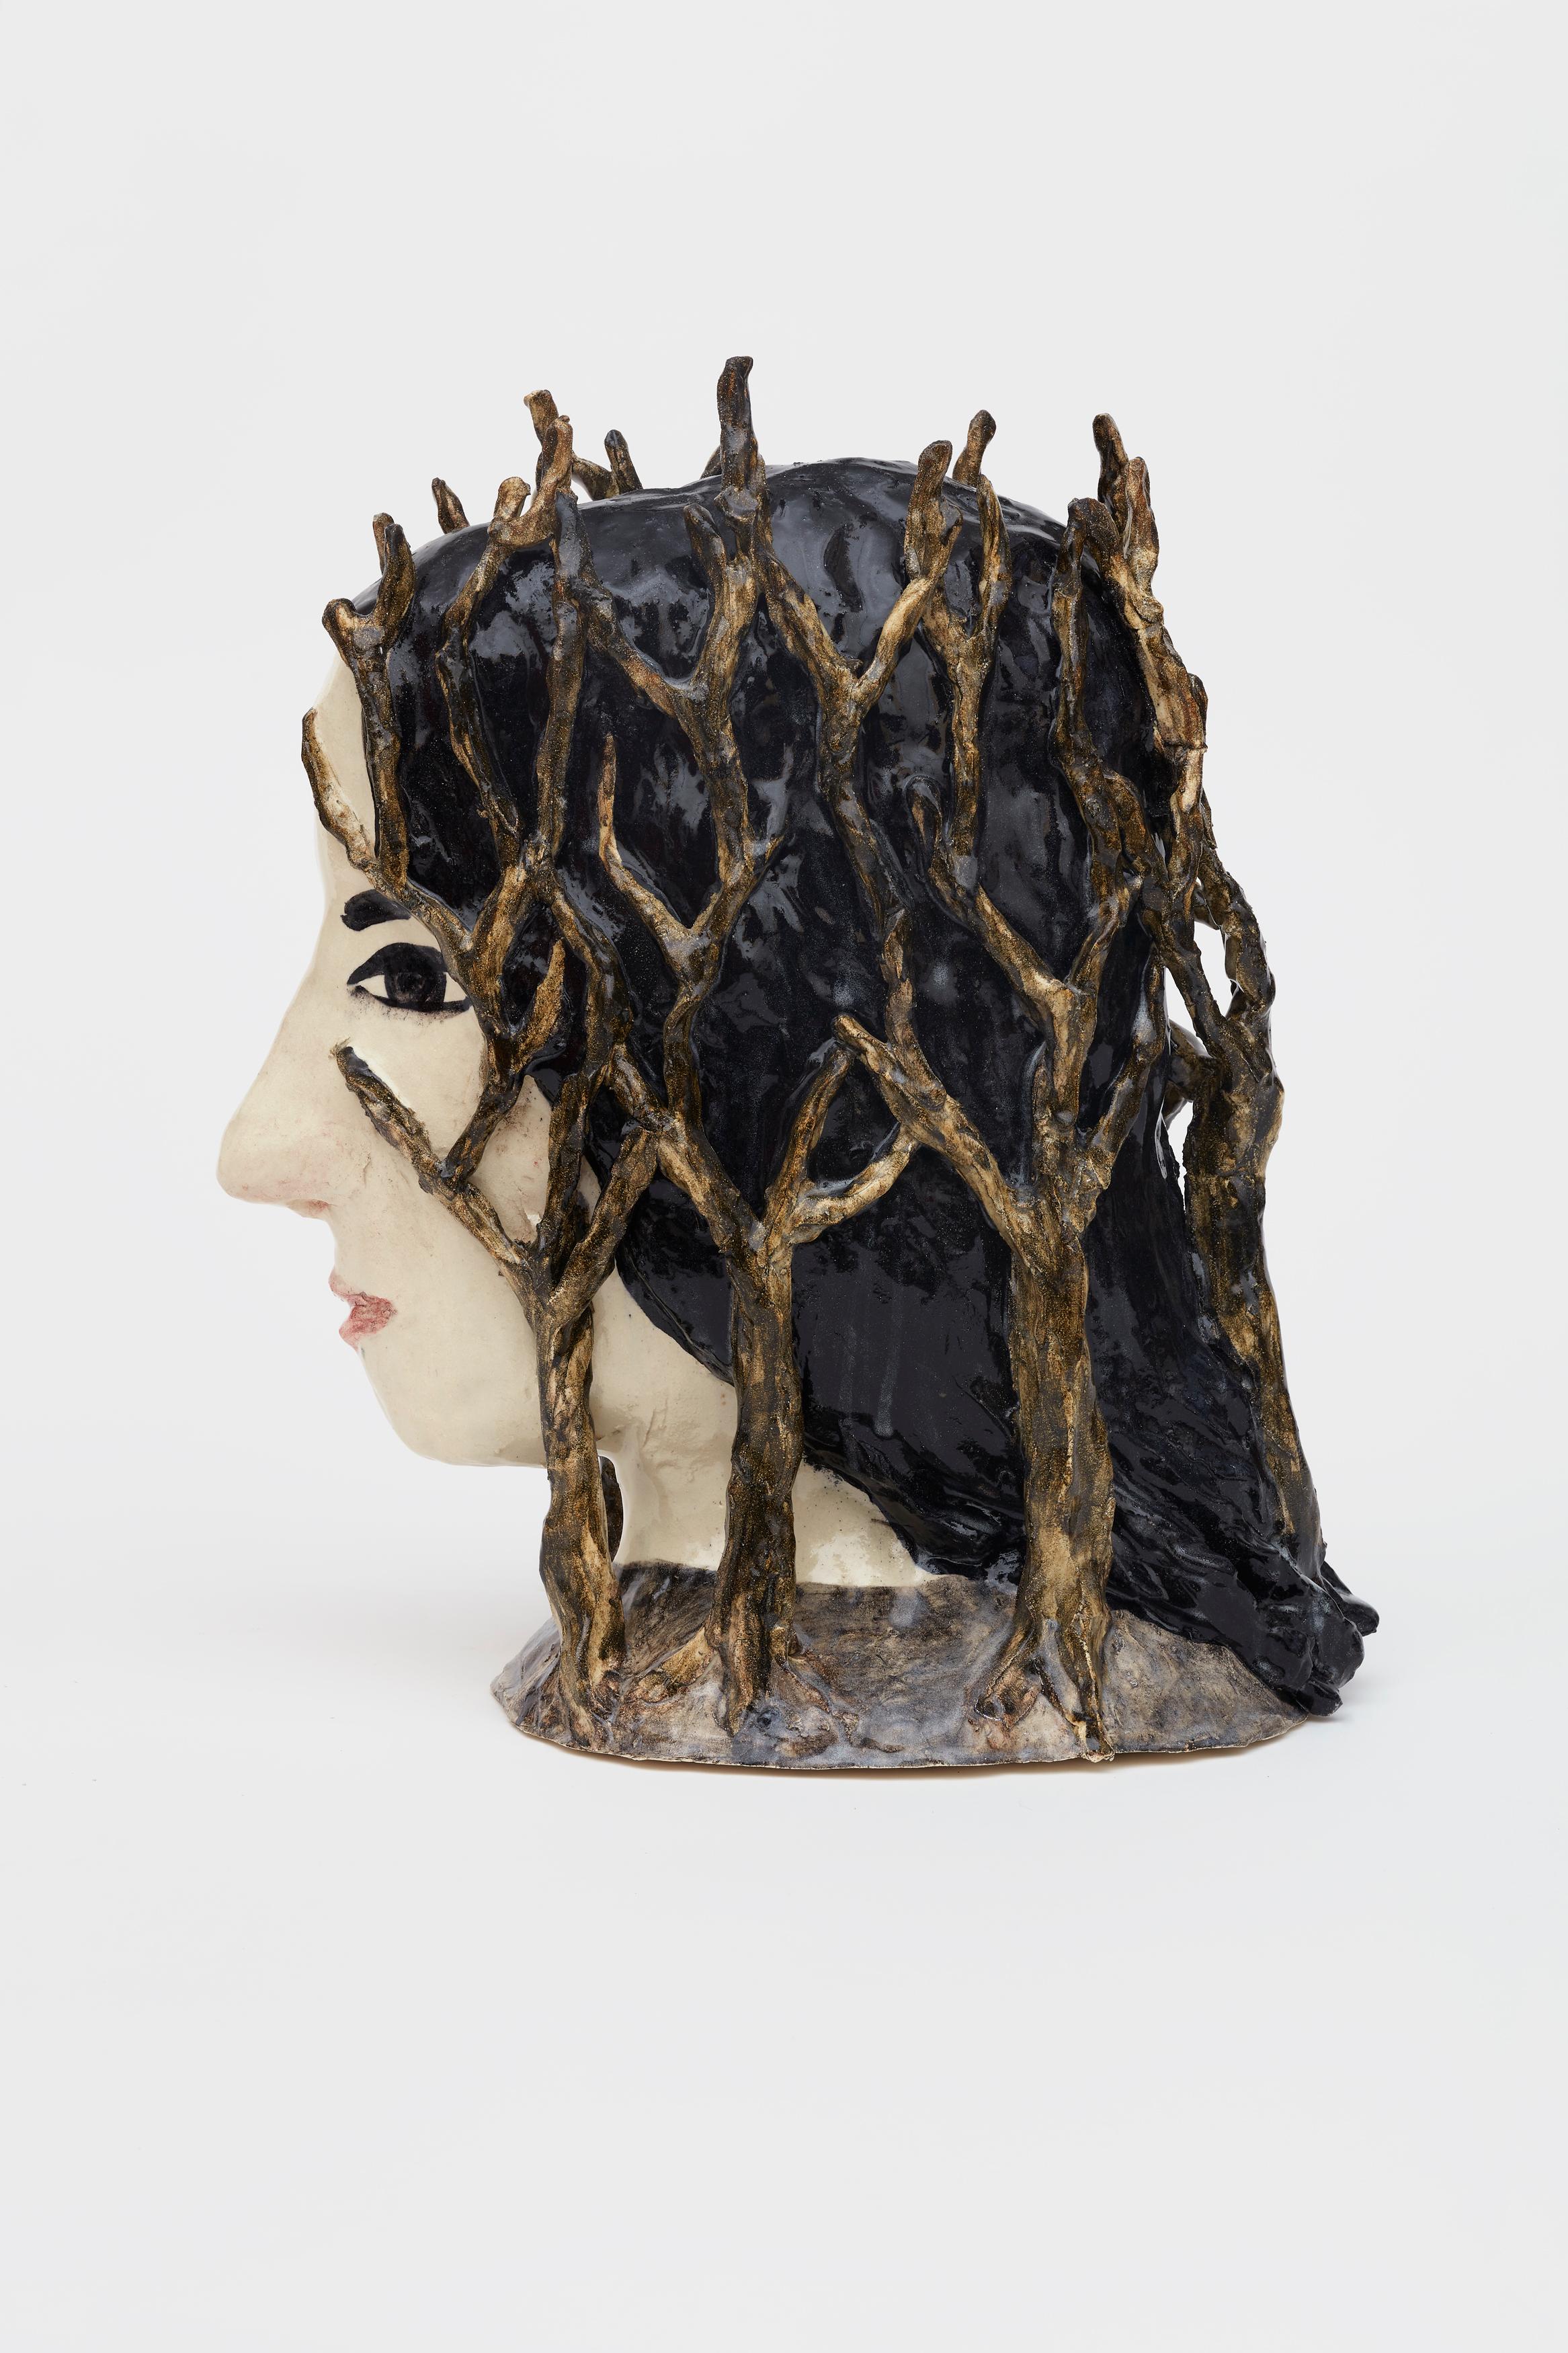 Klara Kristalova Figurative Sculpture - Taken by trees